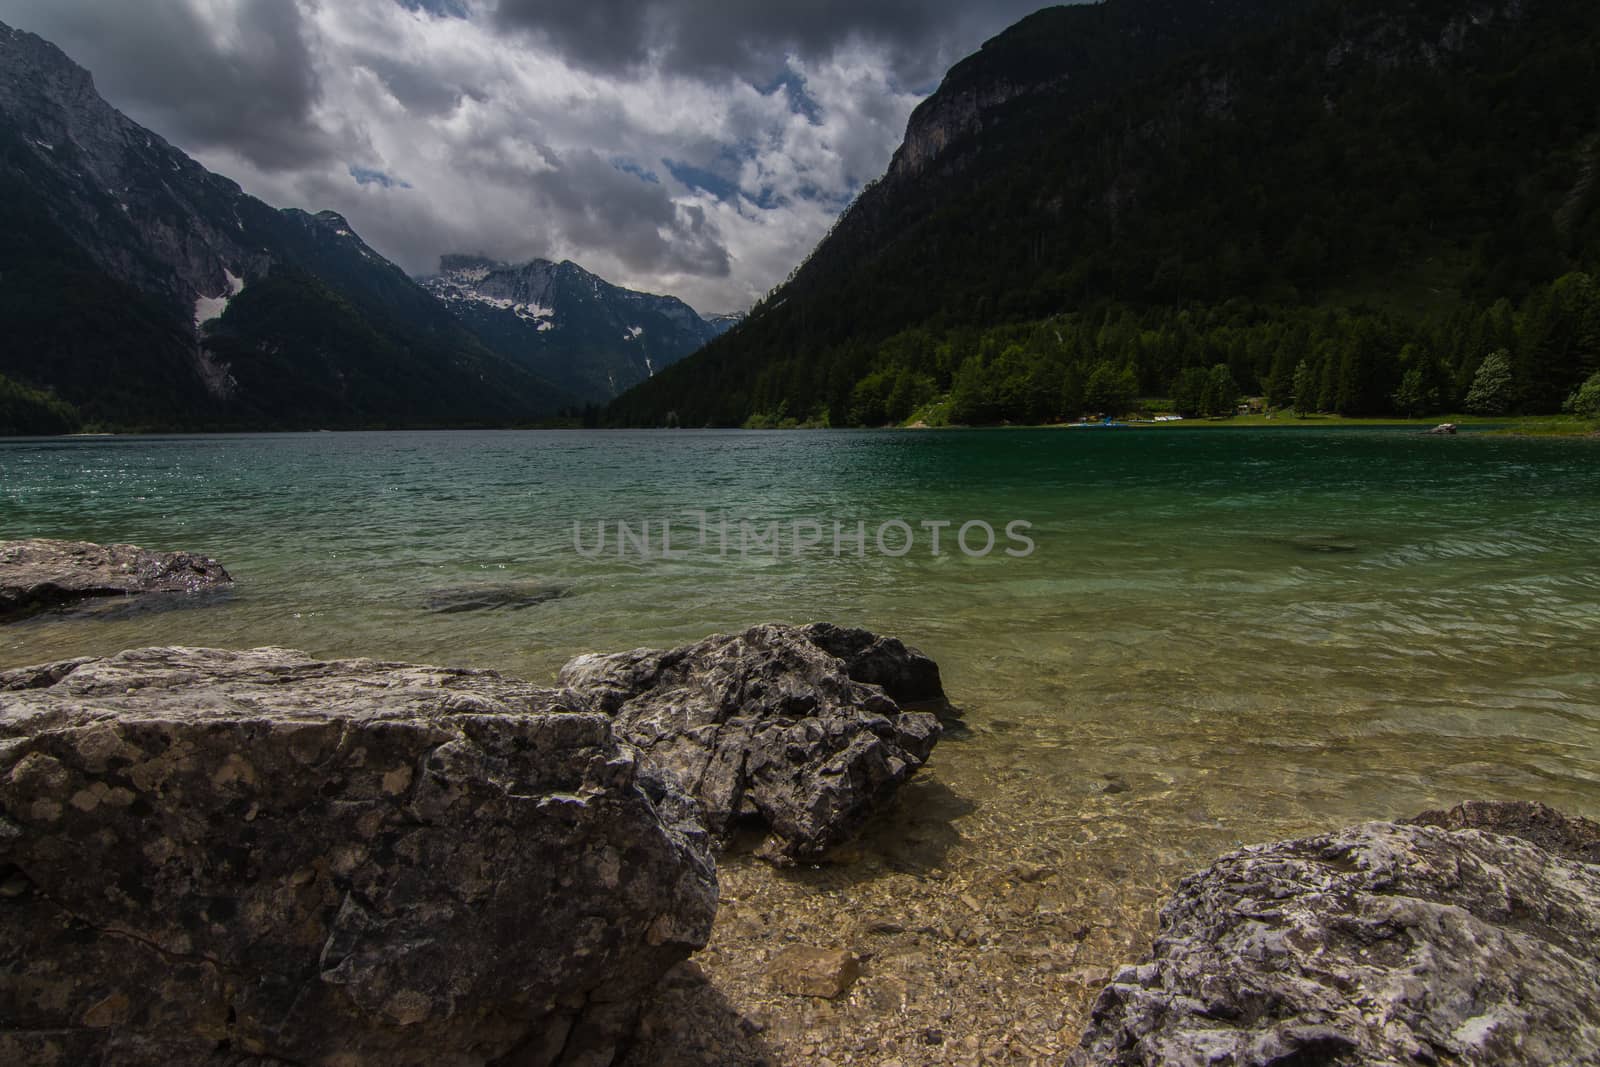  the beautiful Lago del Predil by robertboss